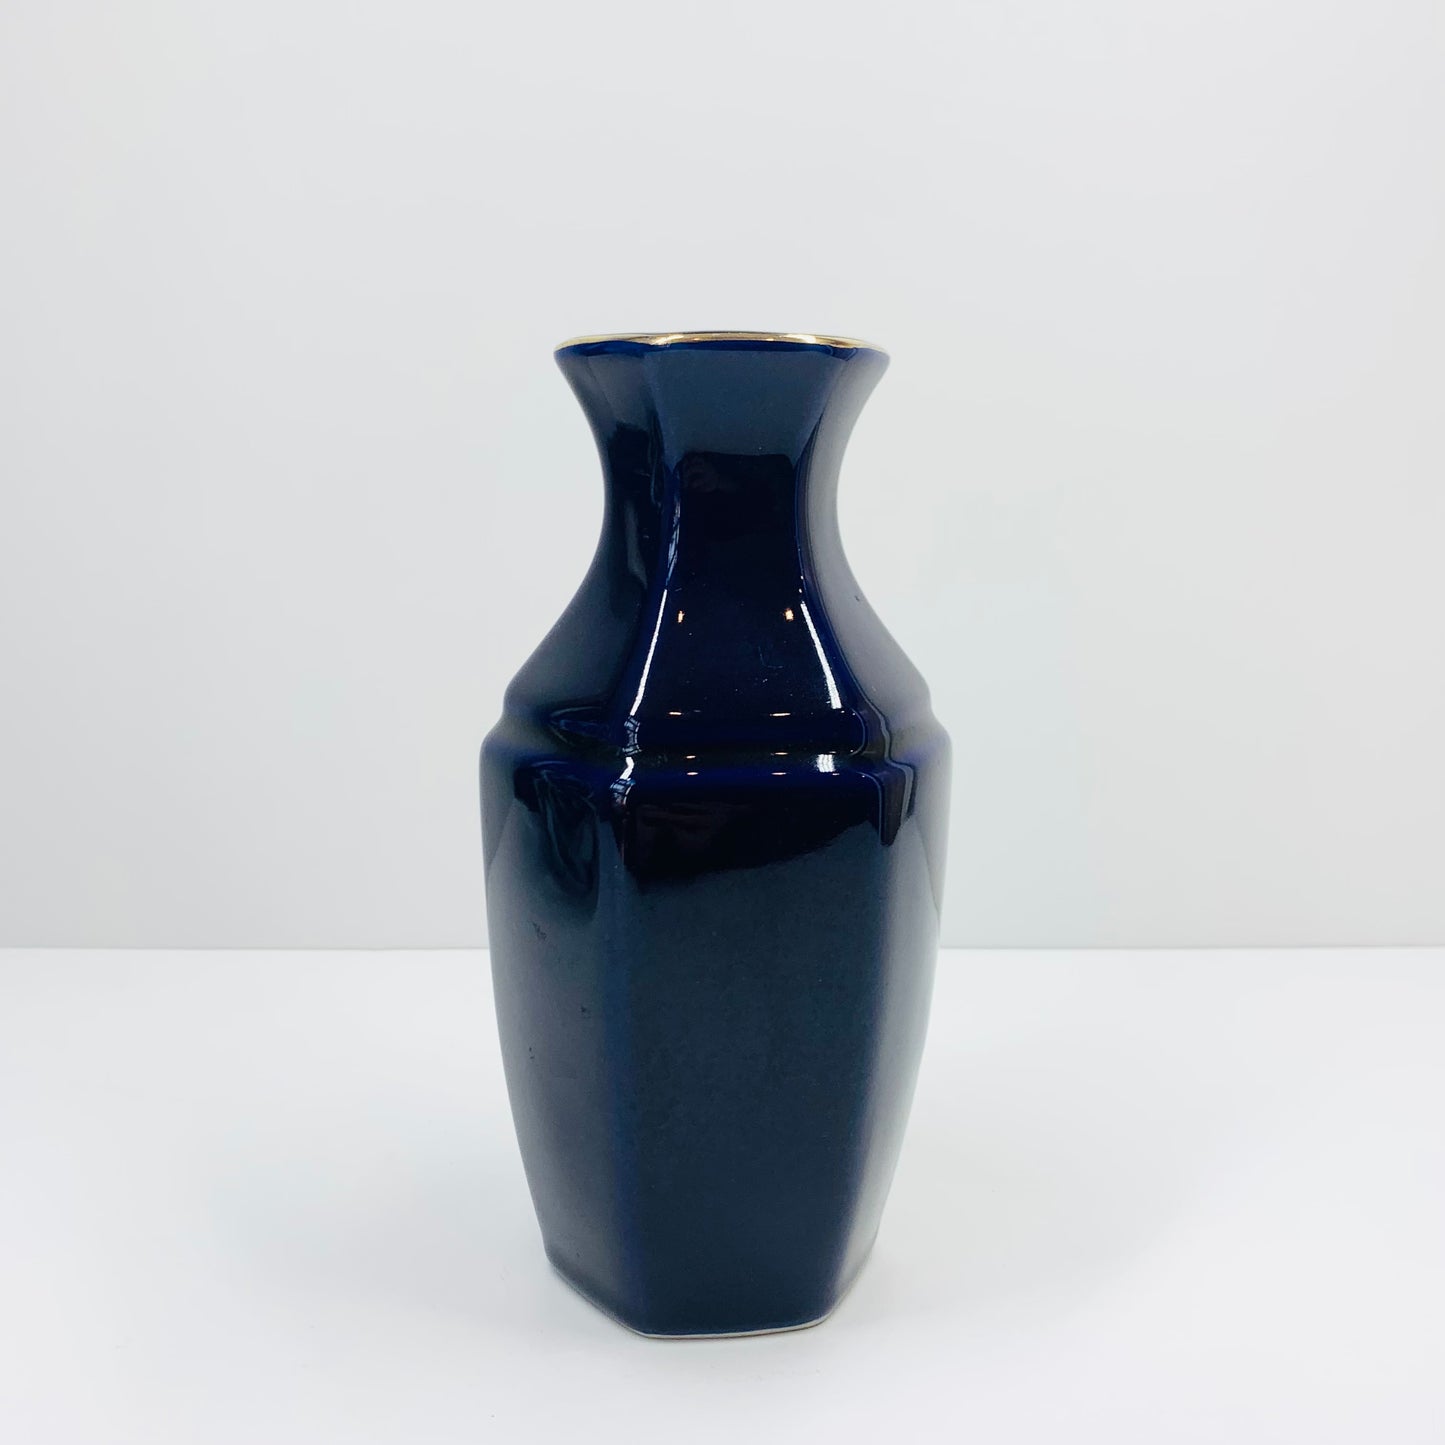 Vintage Japanese Kutani black porcelain vase